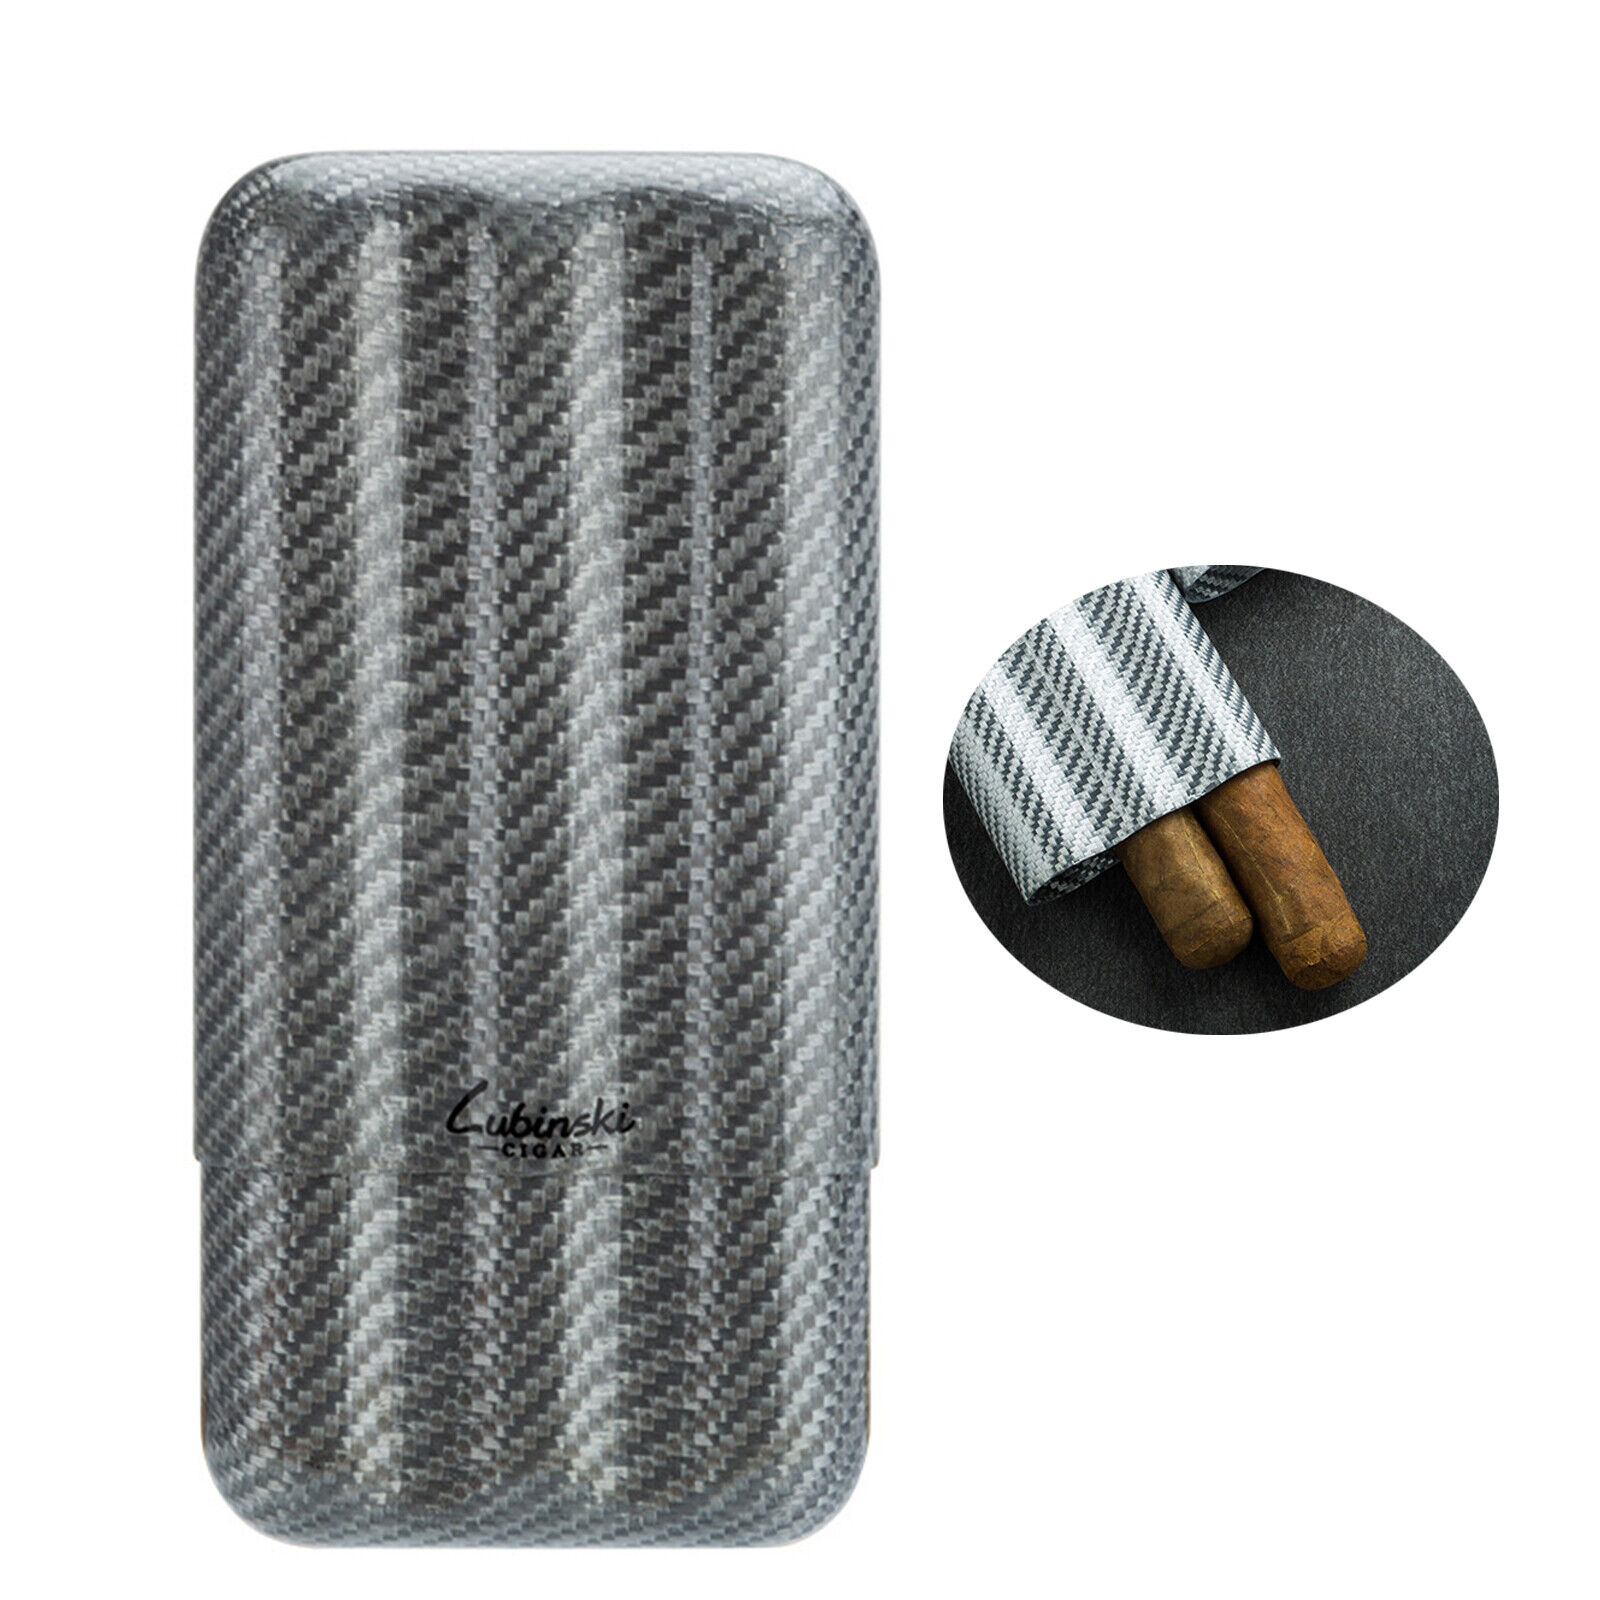 LUBINSKI Travel Silver Cigar Case Humidor Cigar Holder 3 Tubes Carbon Fiber Case